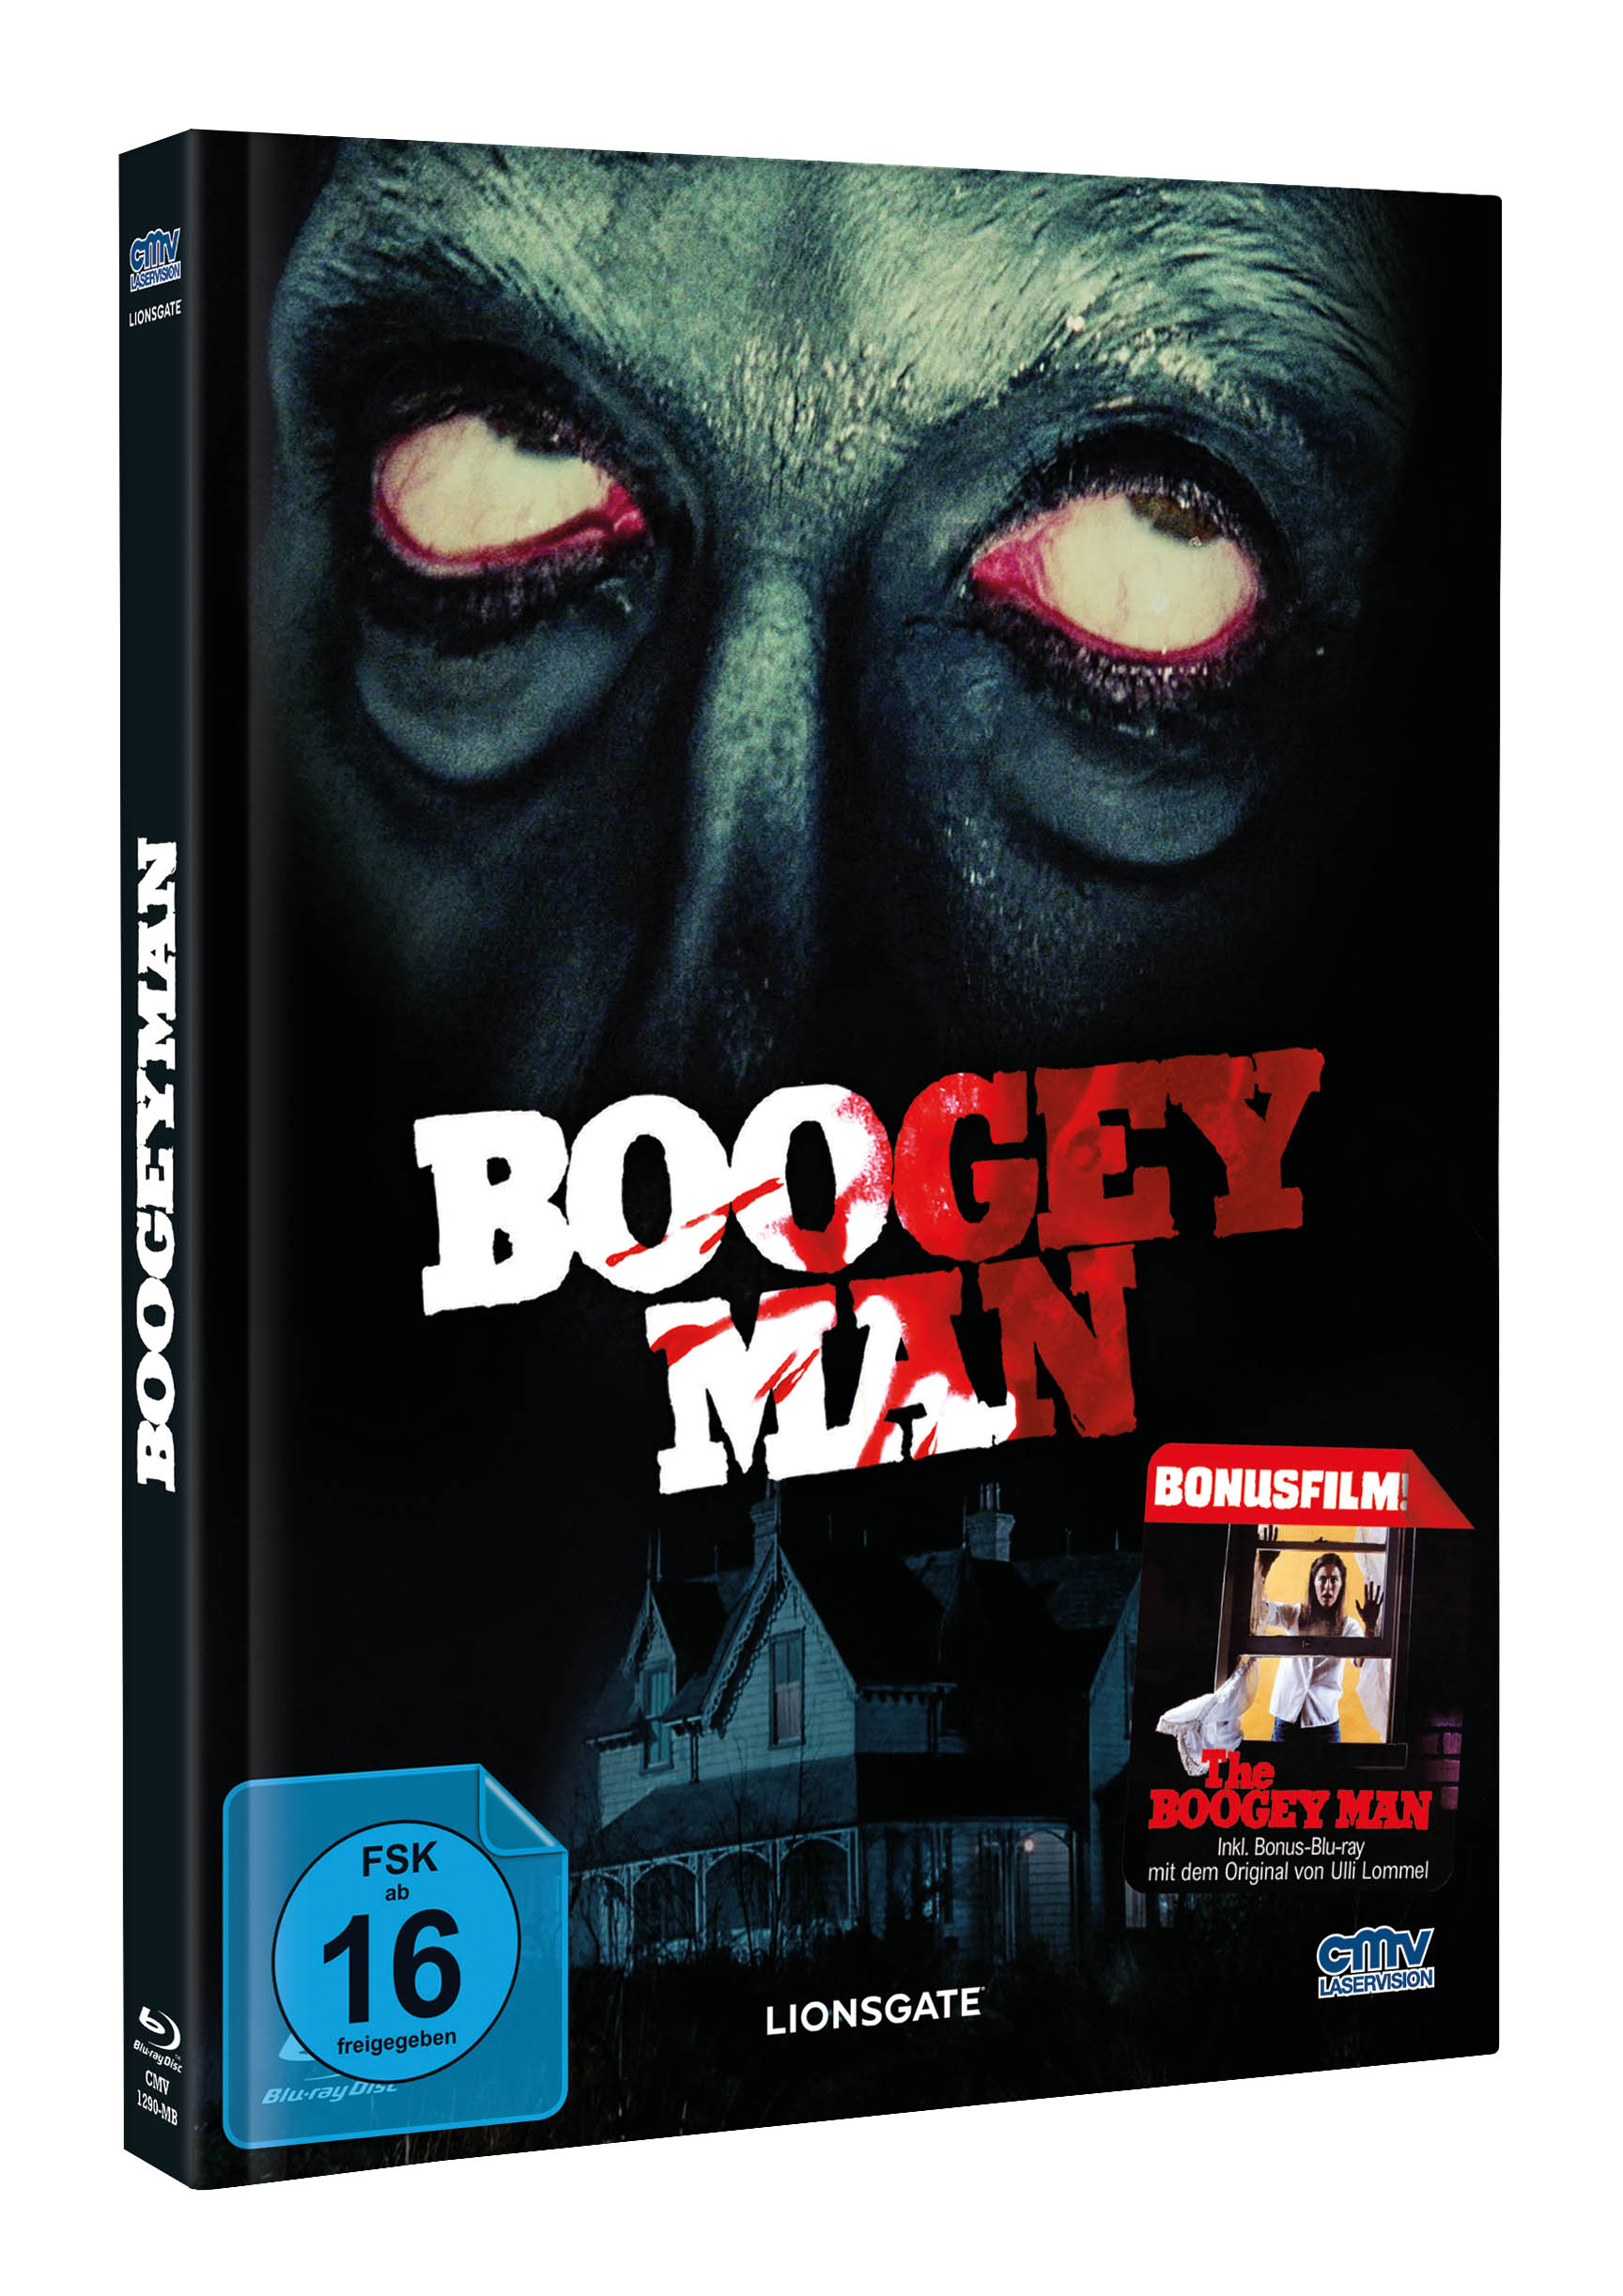 Boogeyman - Der schwarze Mann (DVD + Blu-ray) (Limitiertes Mediabook) (Motiv B)